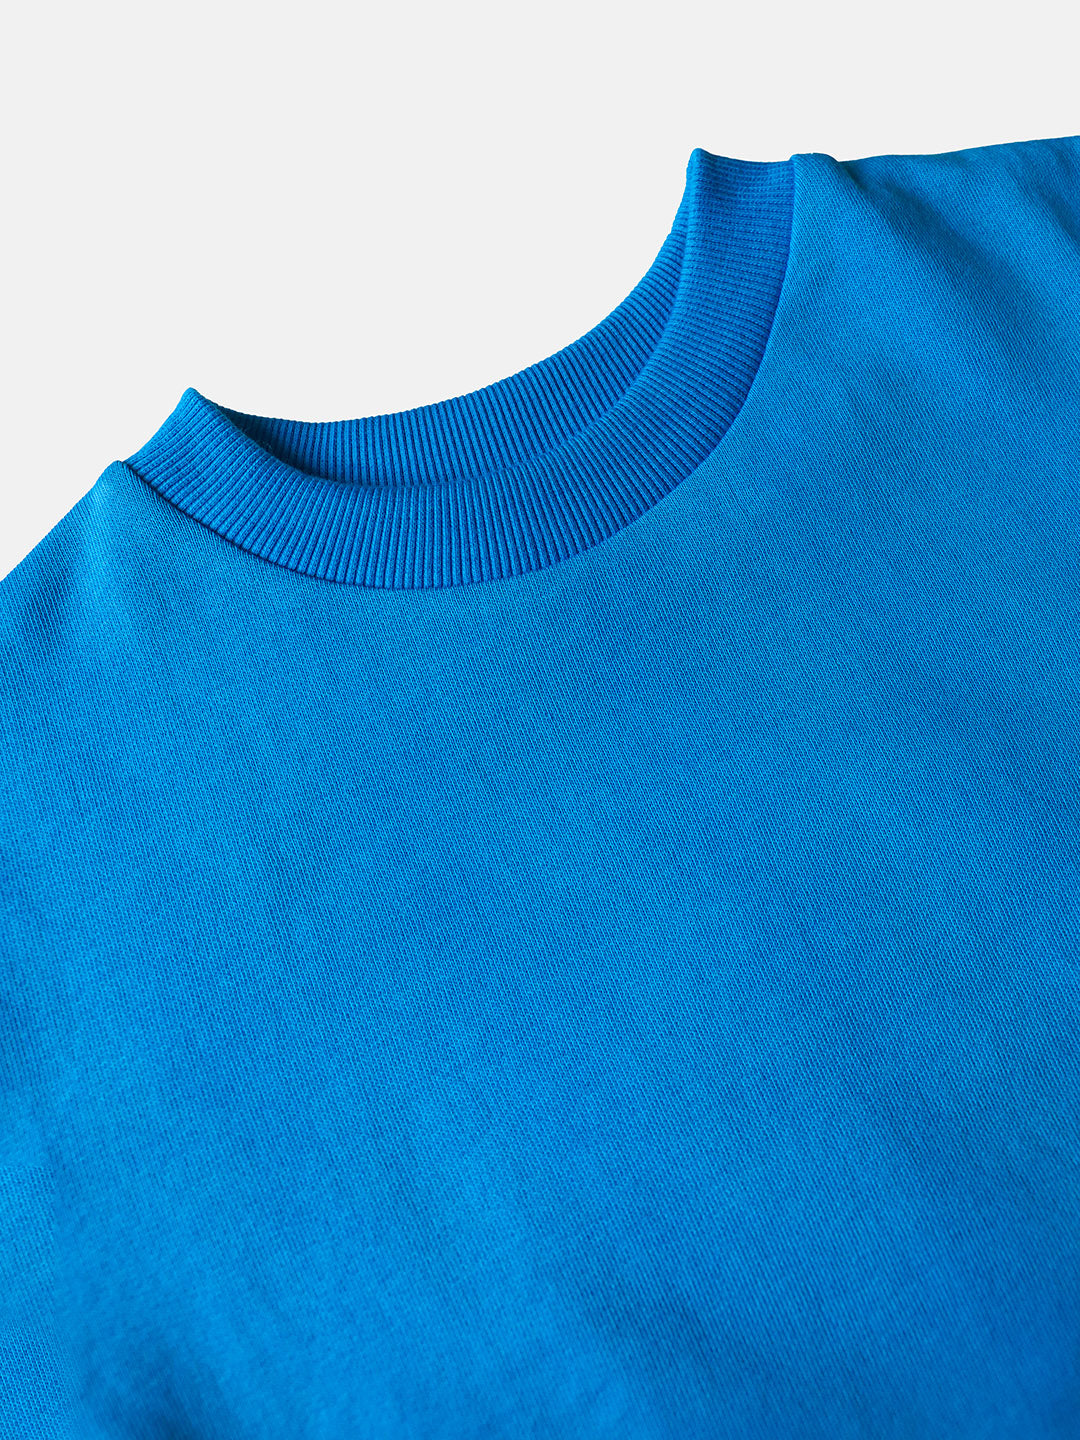 Set of 2 lightweight sweatshirts: Orange and Blue